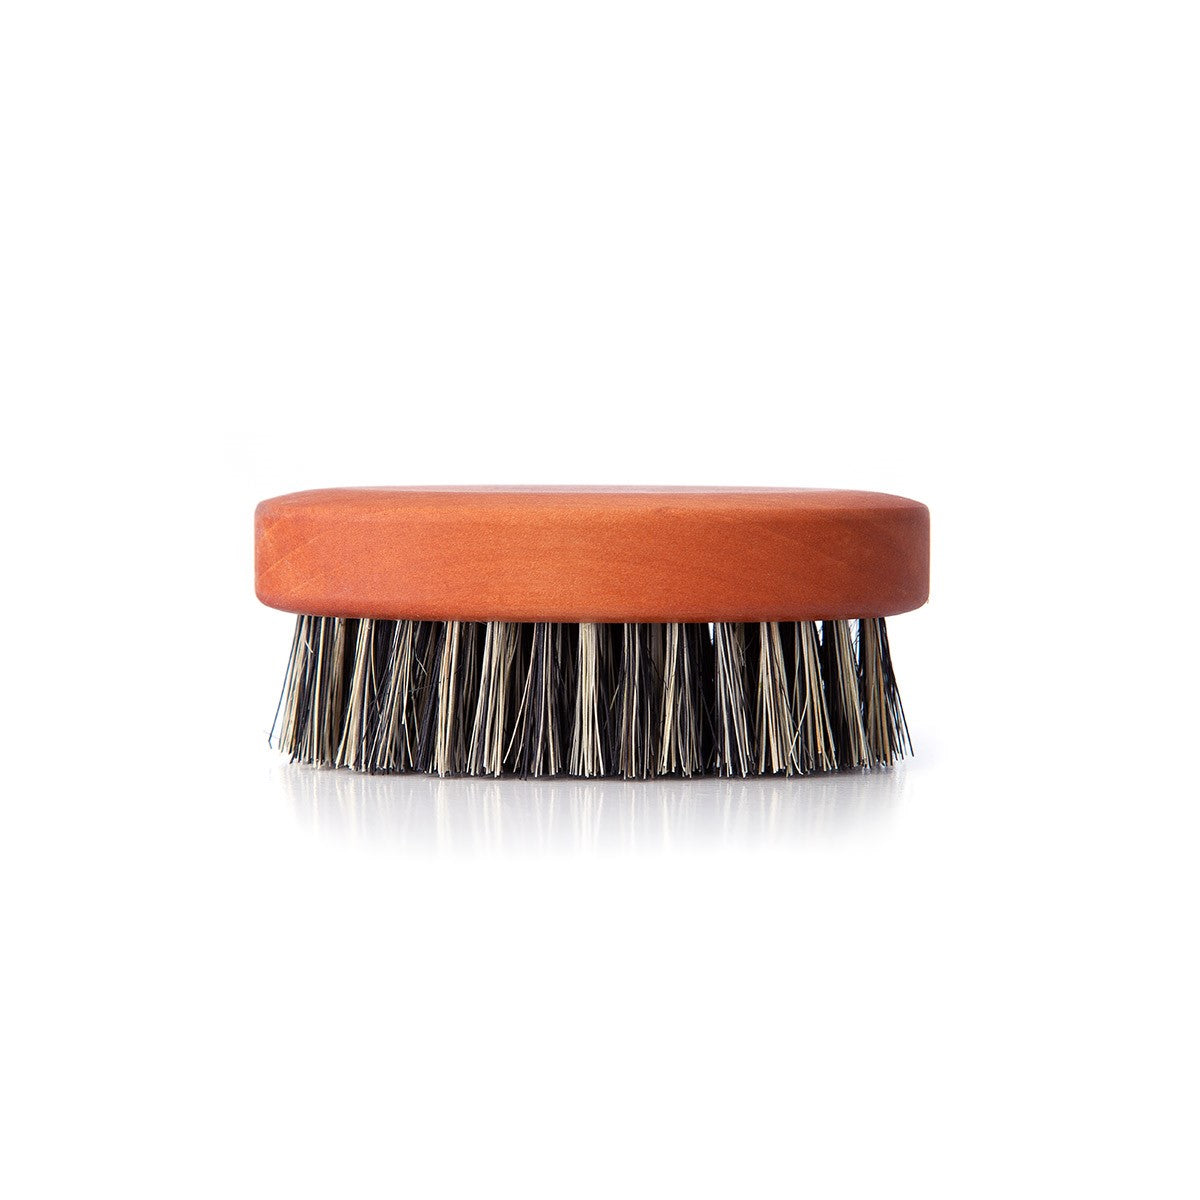 Pearwood Grey Tampico Fibre Beard Brush/travel Military Hair brush